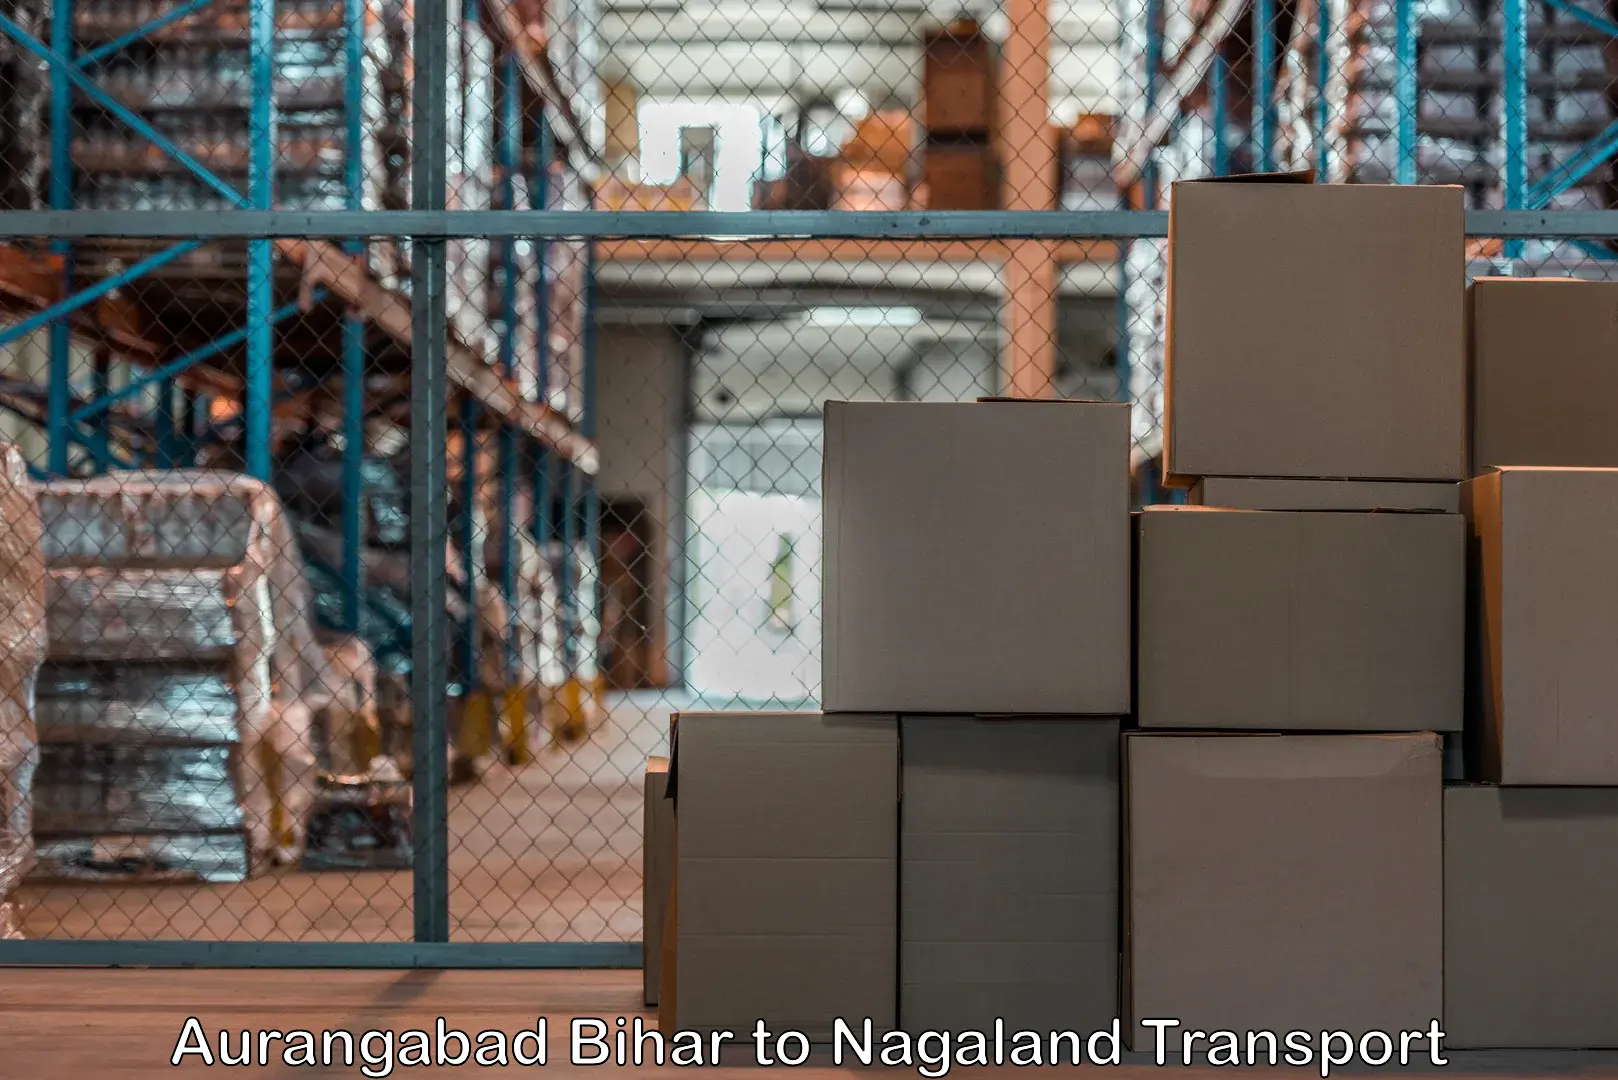 Lorry transport service Aurangabad Bihar to Kohima